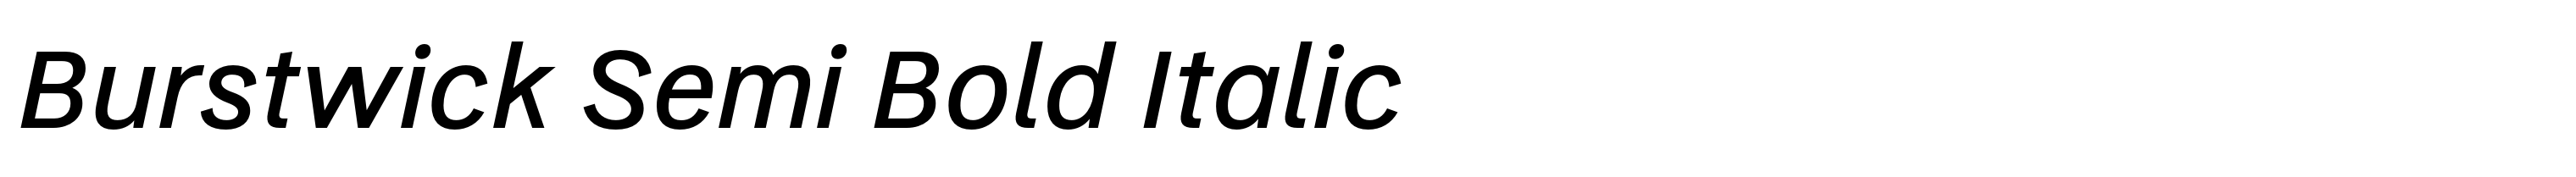 Burstwick Semi Bold Italic